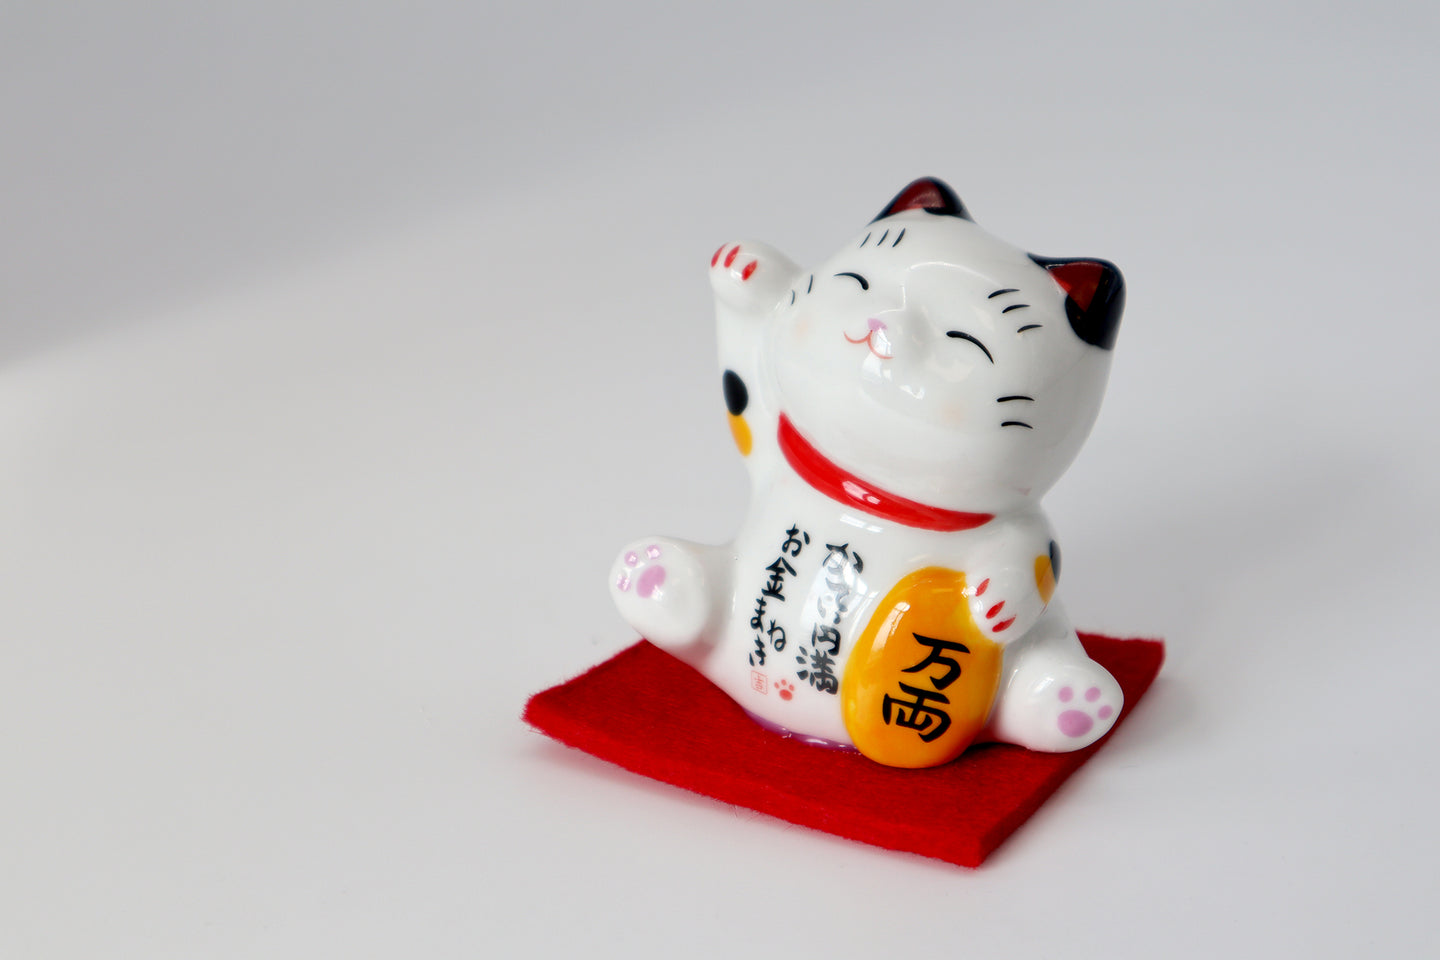 Cute Maneki-neko 招き猫 for the fortune